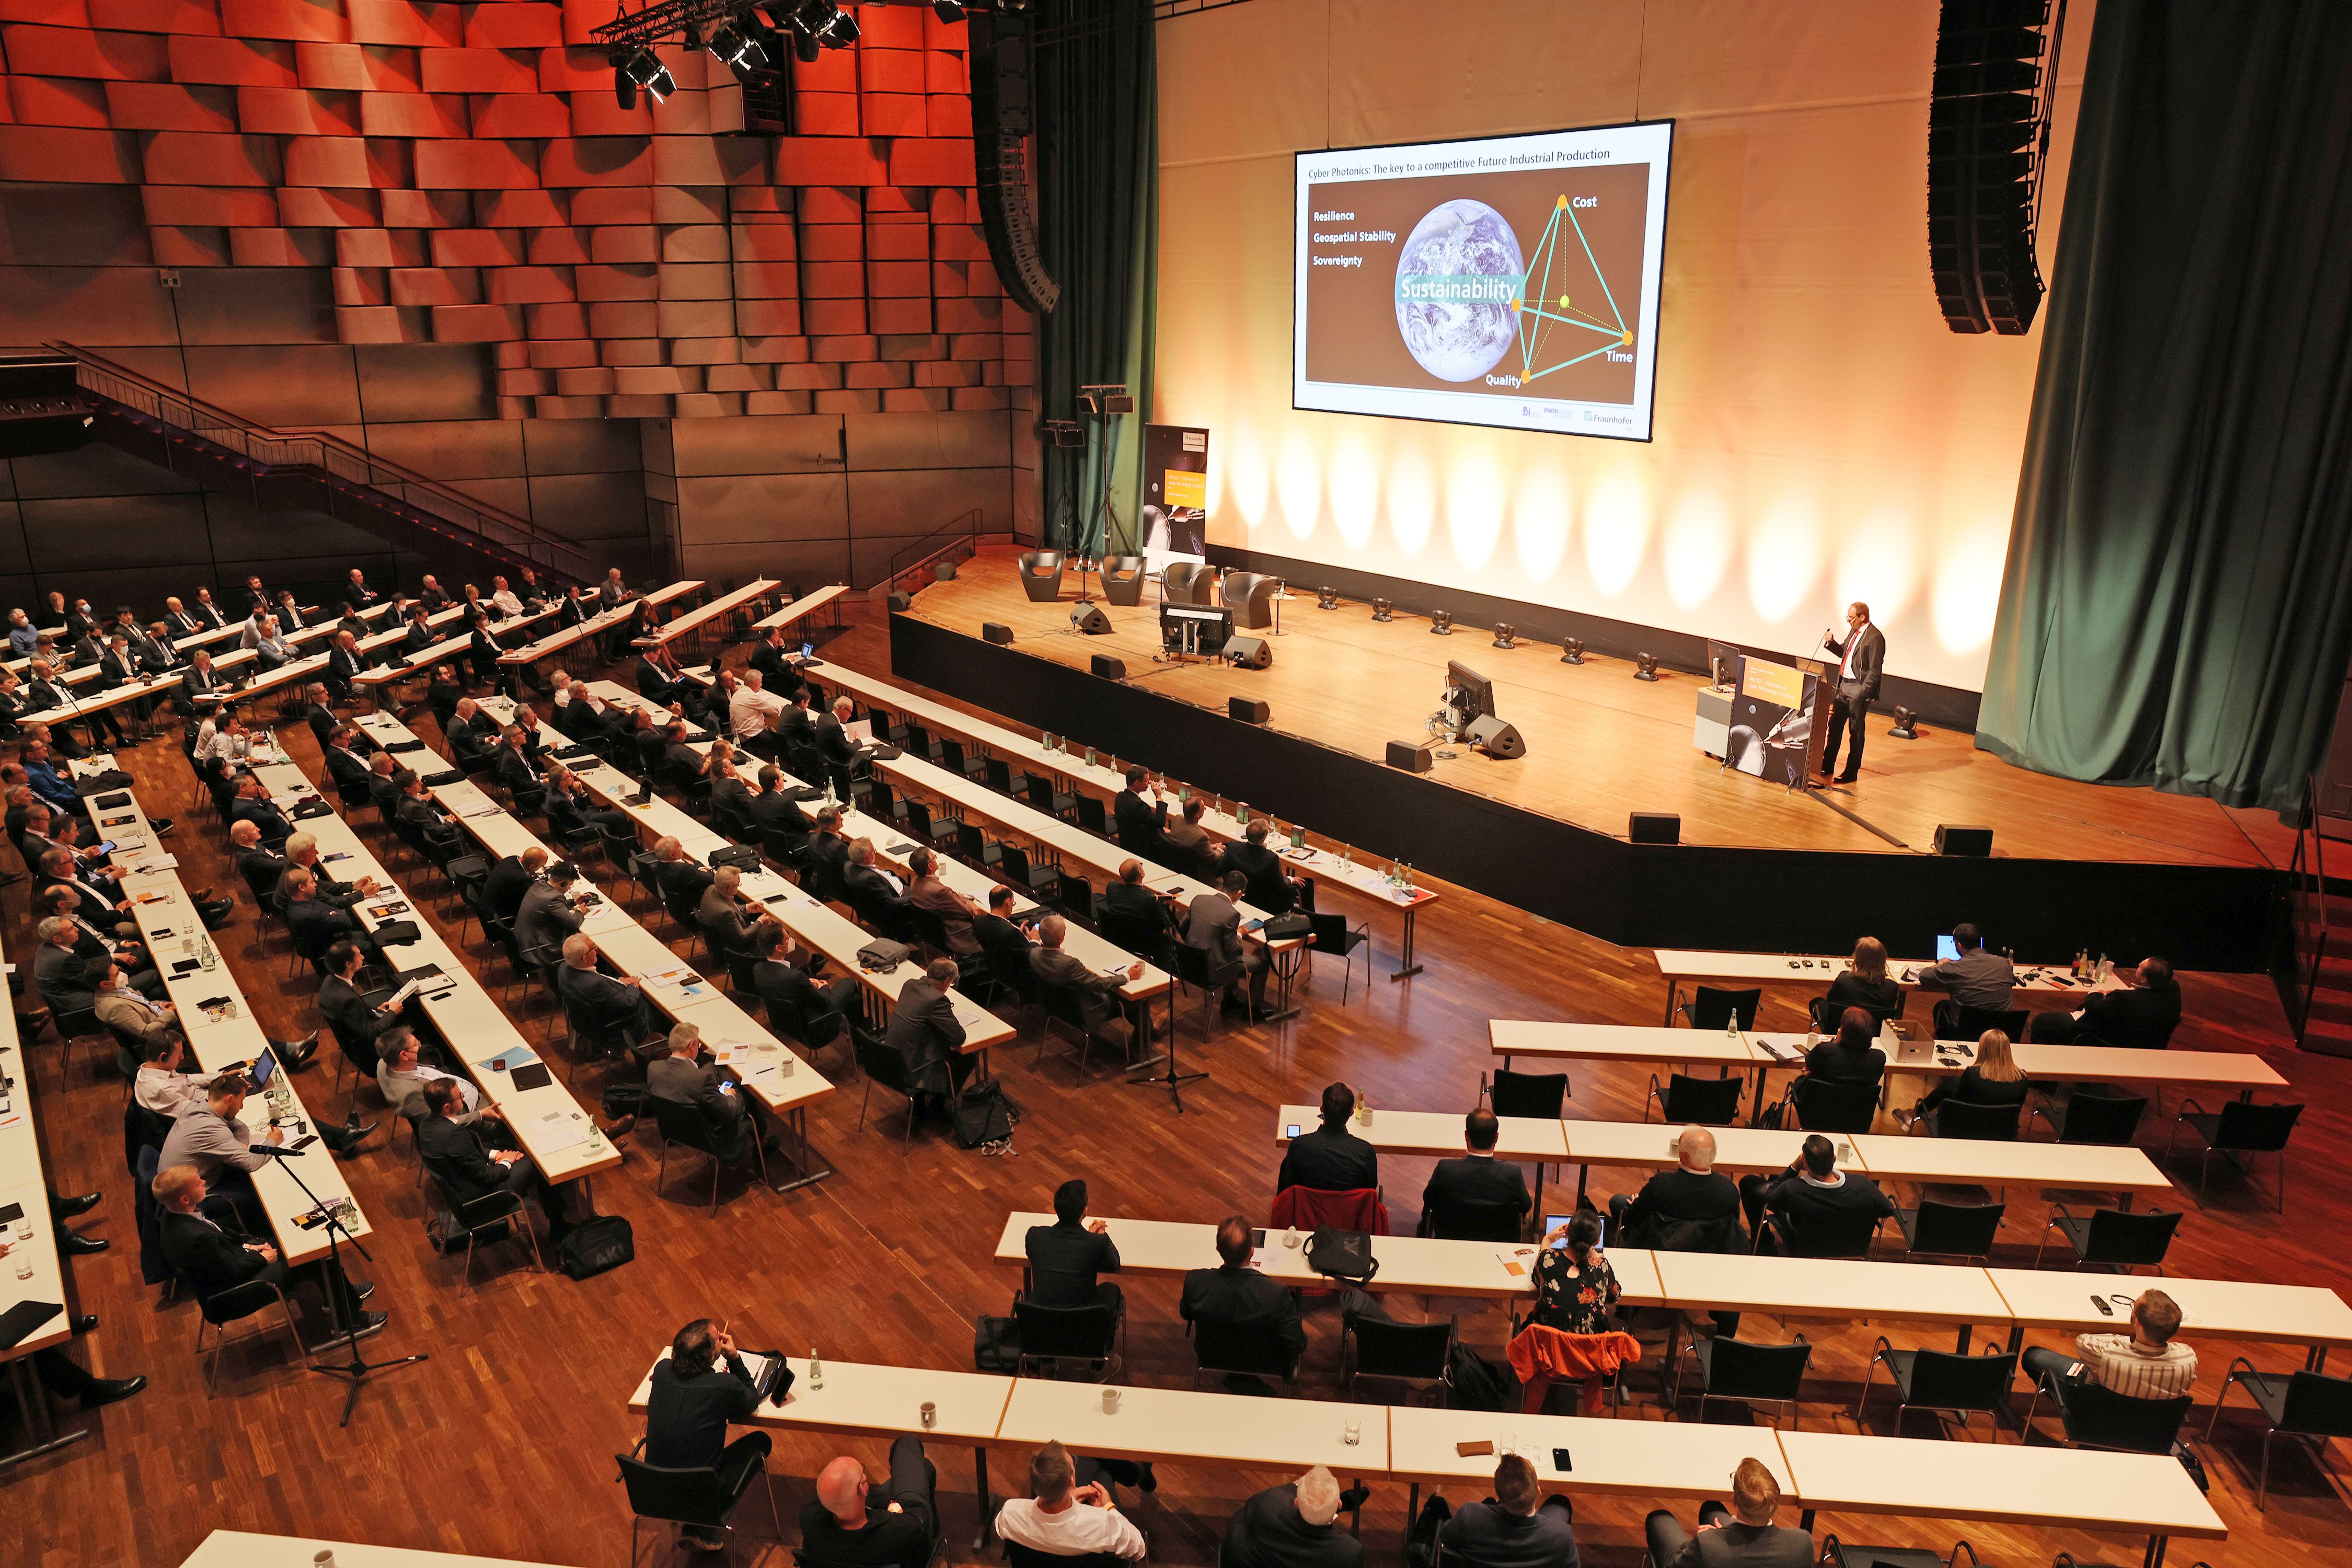 Prof. Häfner's keynote address at the International Laser Technology Congress AKL'22 in Aachen.  